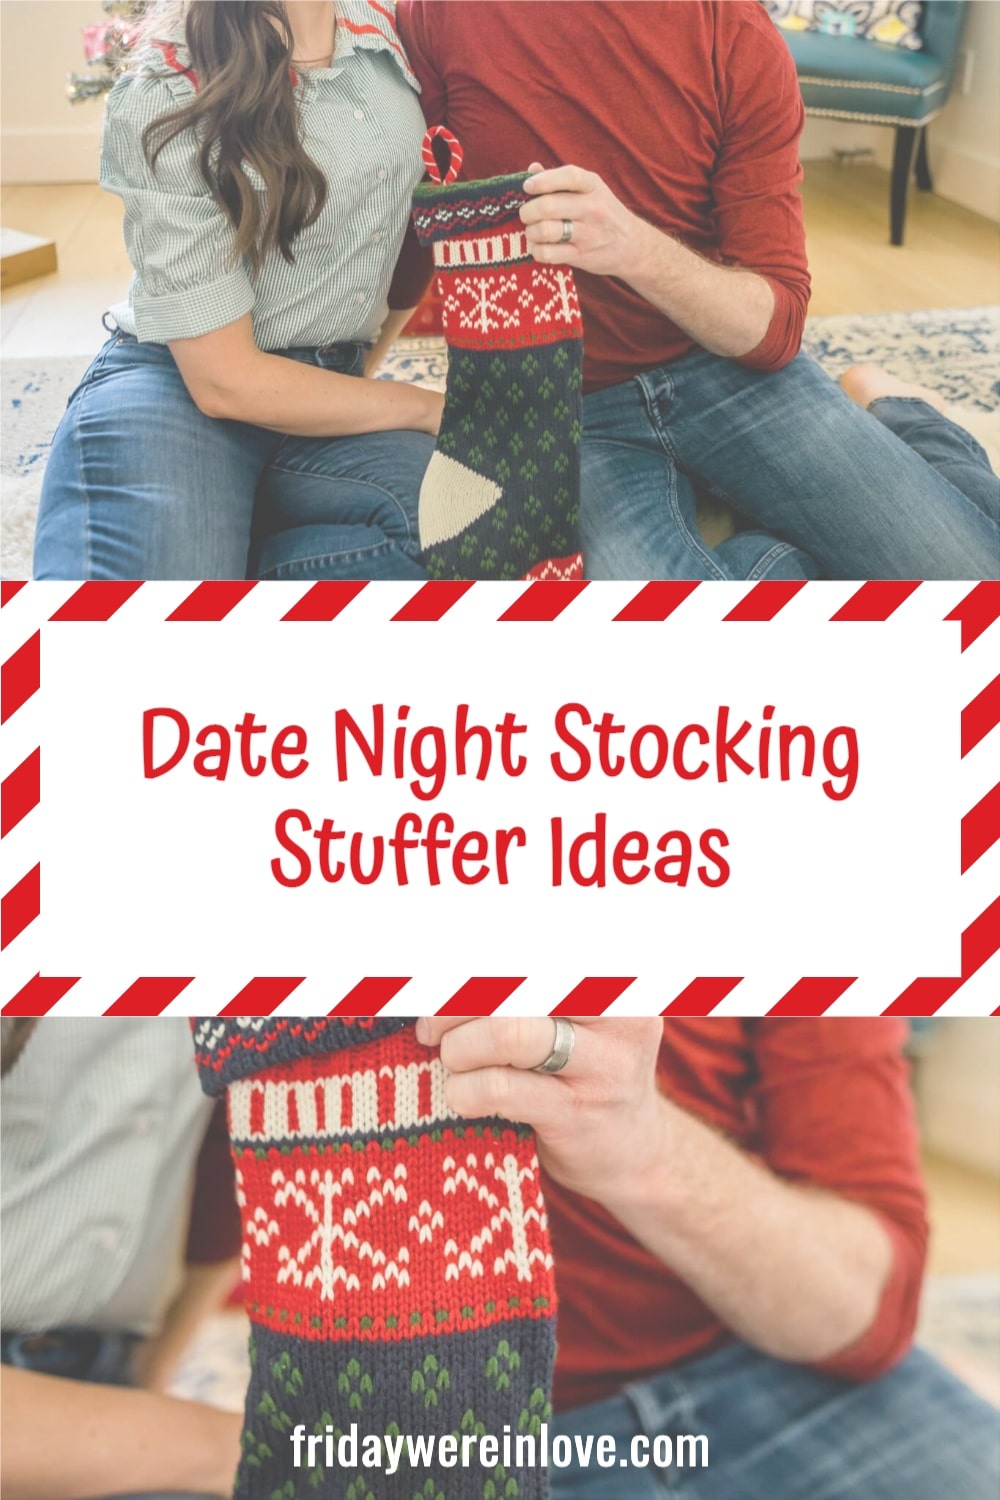 Date Night Stocking Stuffer Ideas Friday Were In Love 